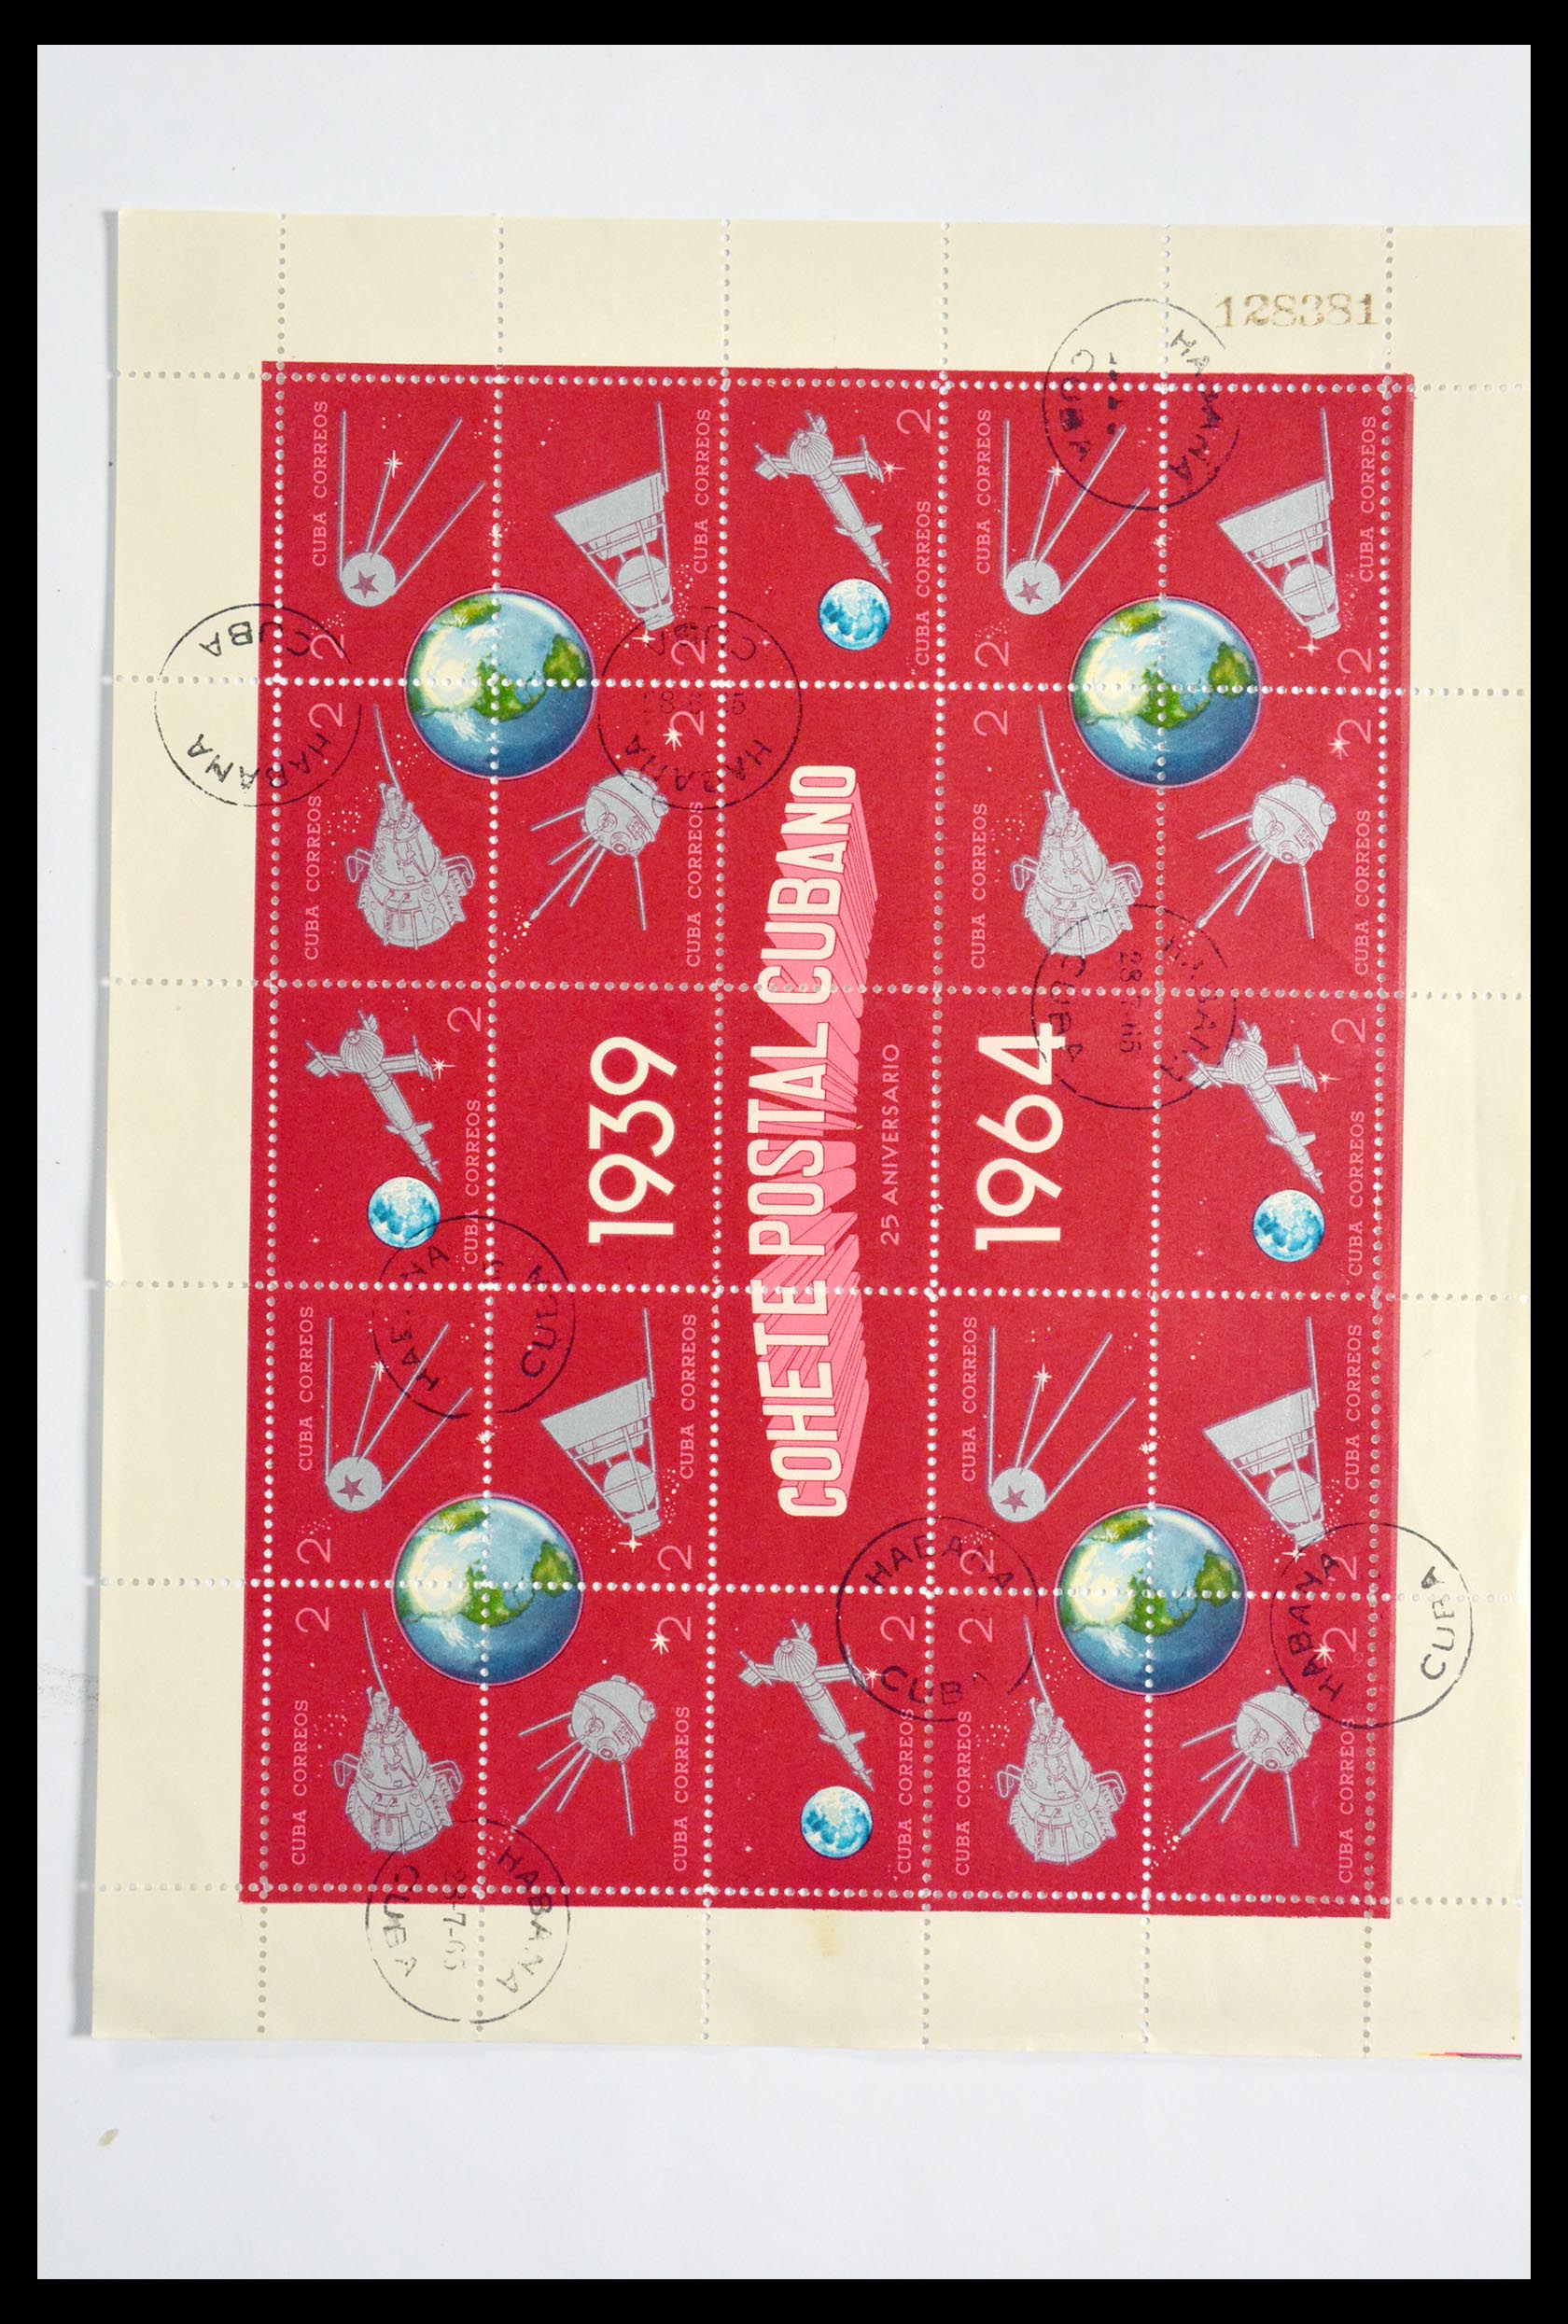 29917 072 - 29917 Latijns Amerika luchtpostzegels.